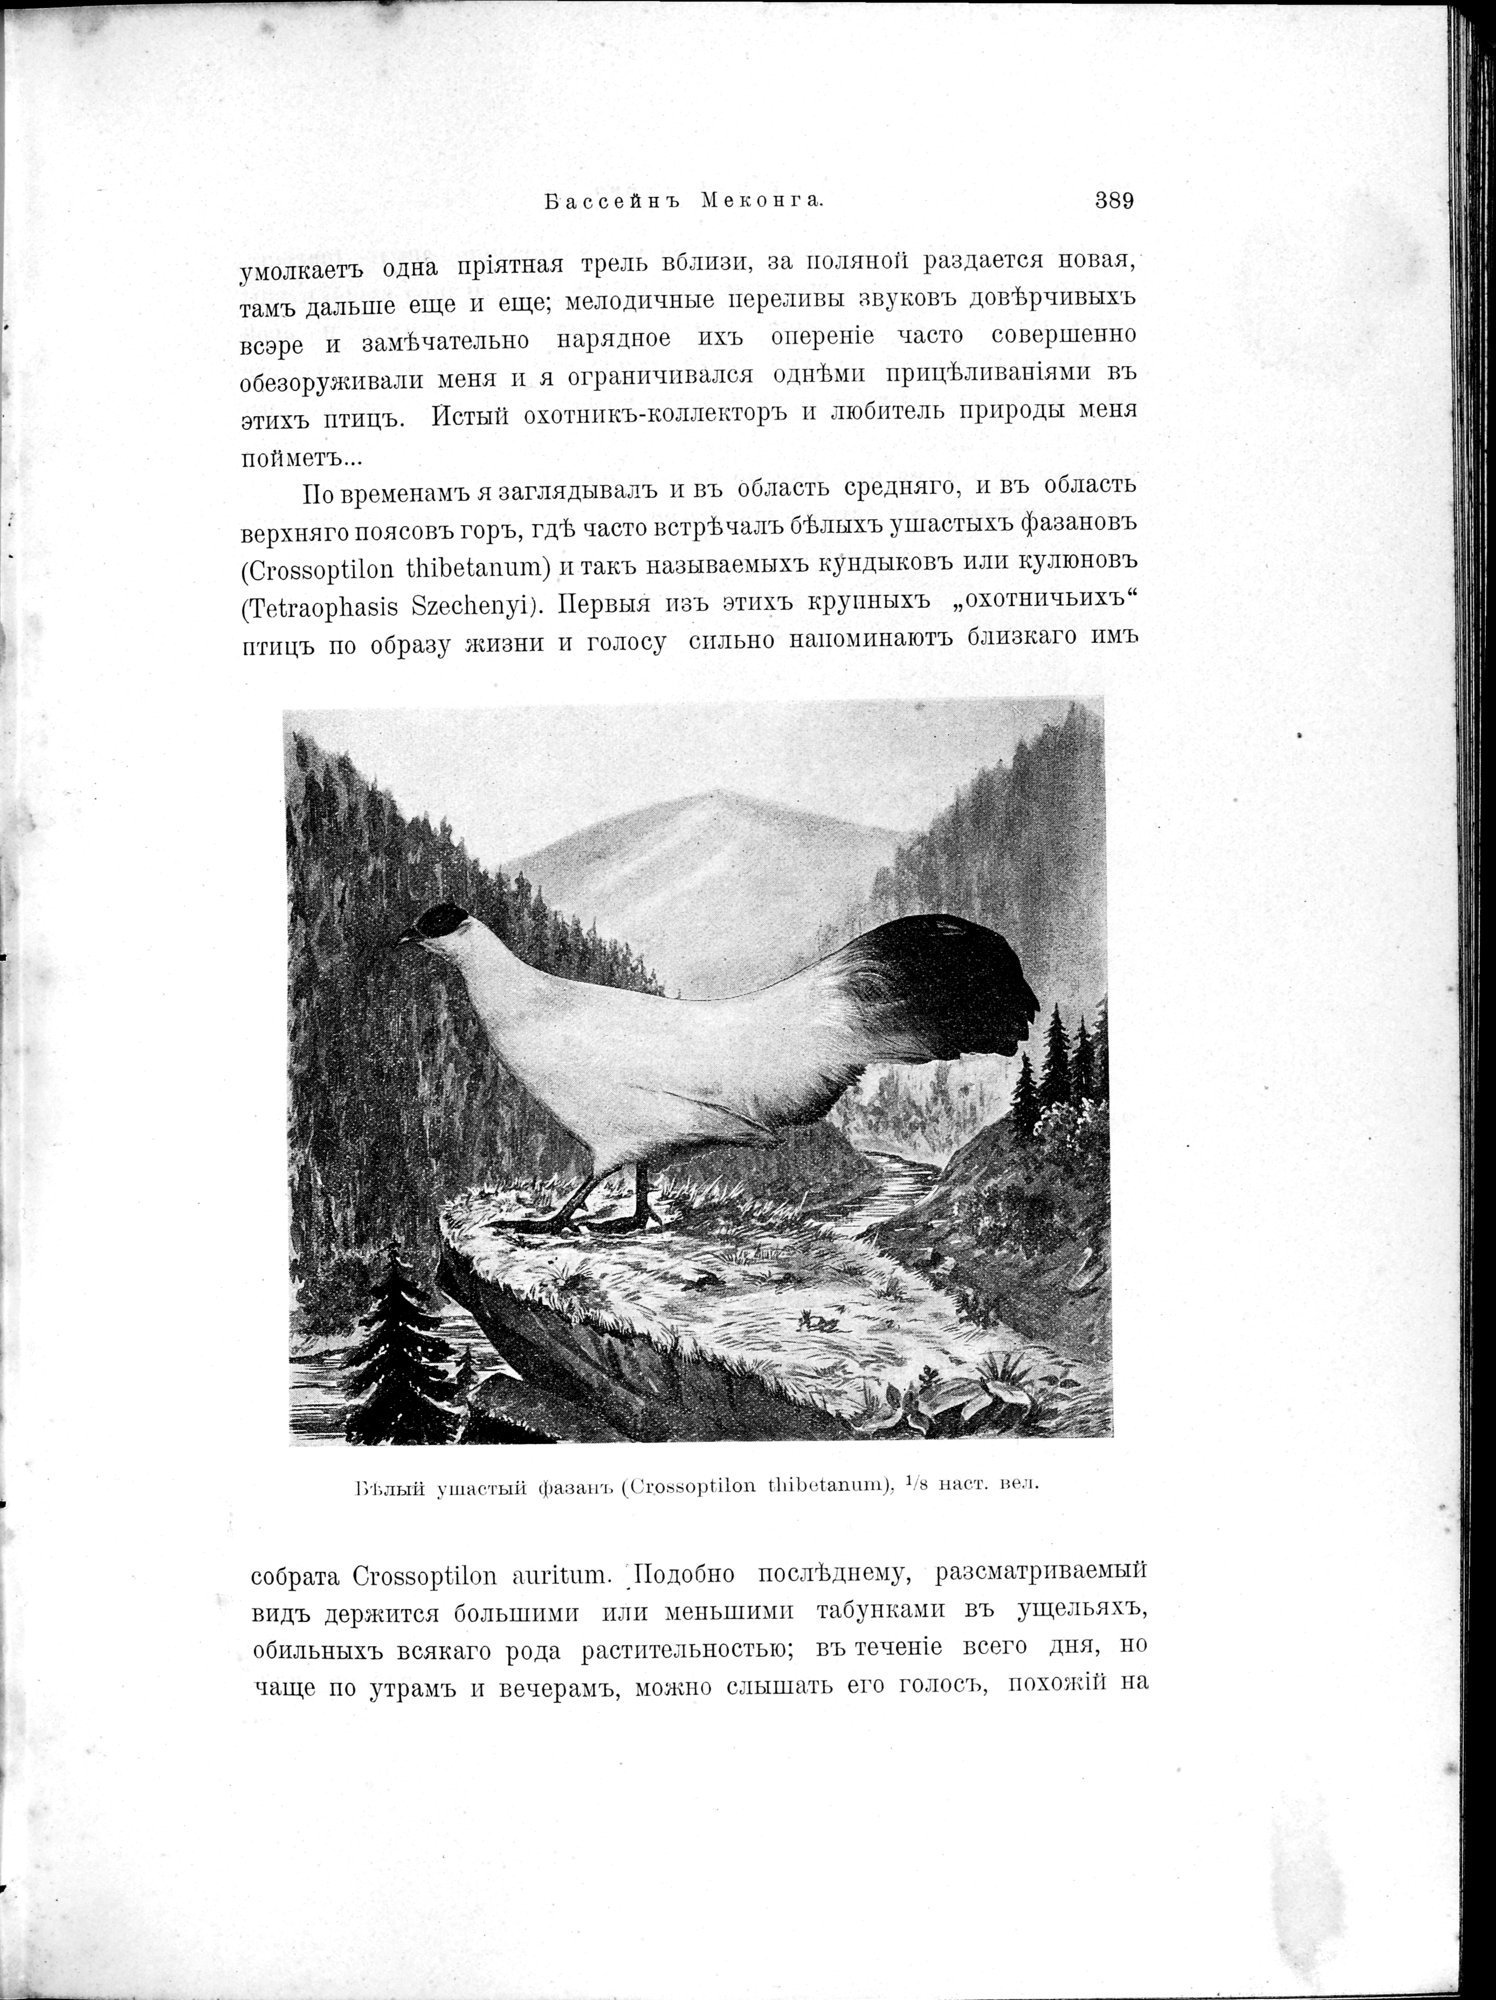 Mongoliia i Kam : vol.2 / Page 181 (Grayscale High Resolution Image)